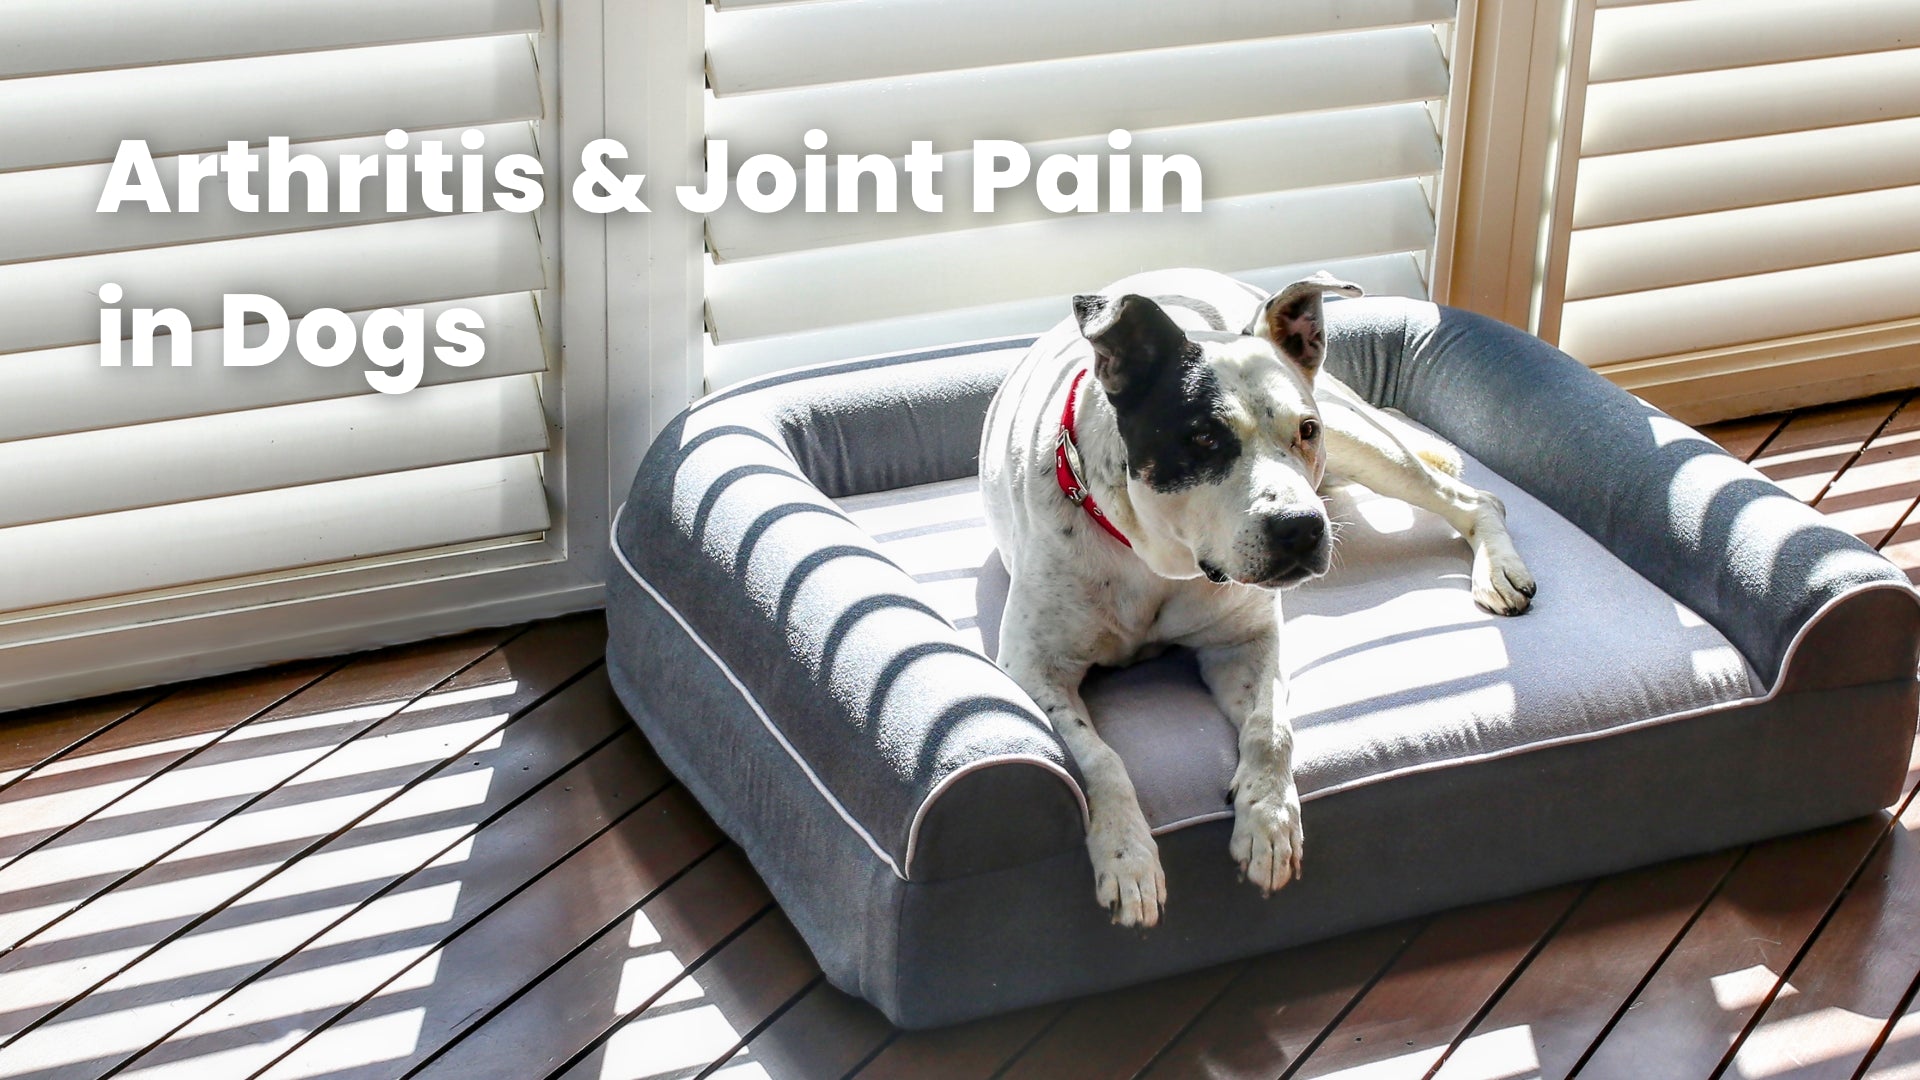 Arthritis & Joint Pain in Dogs